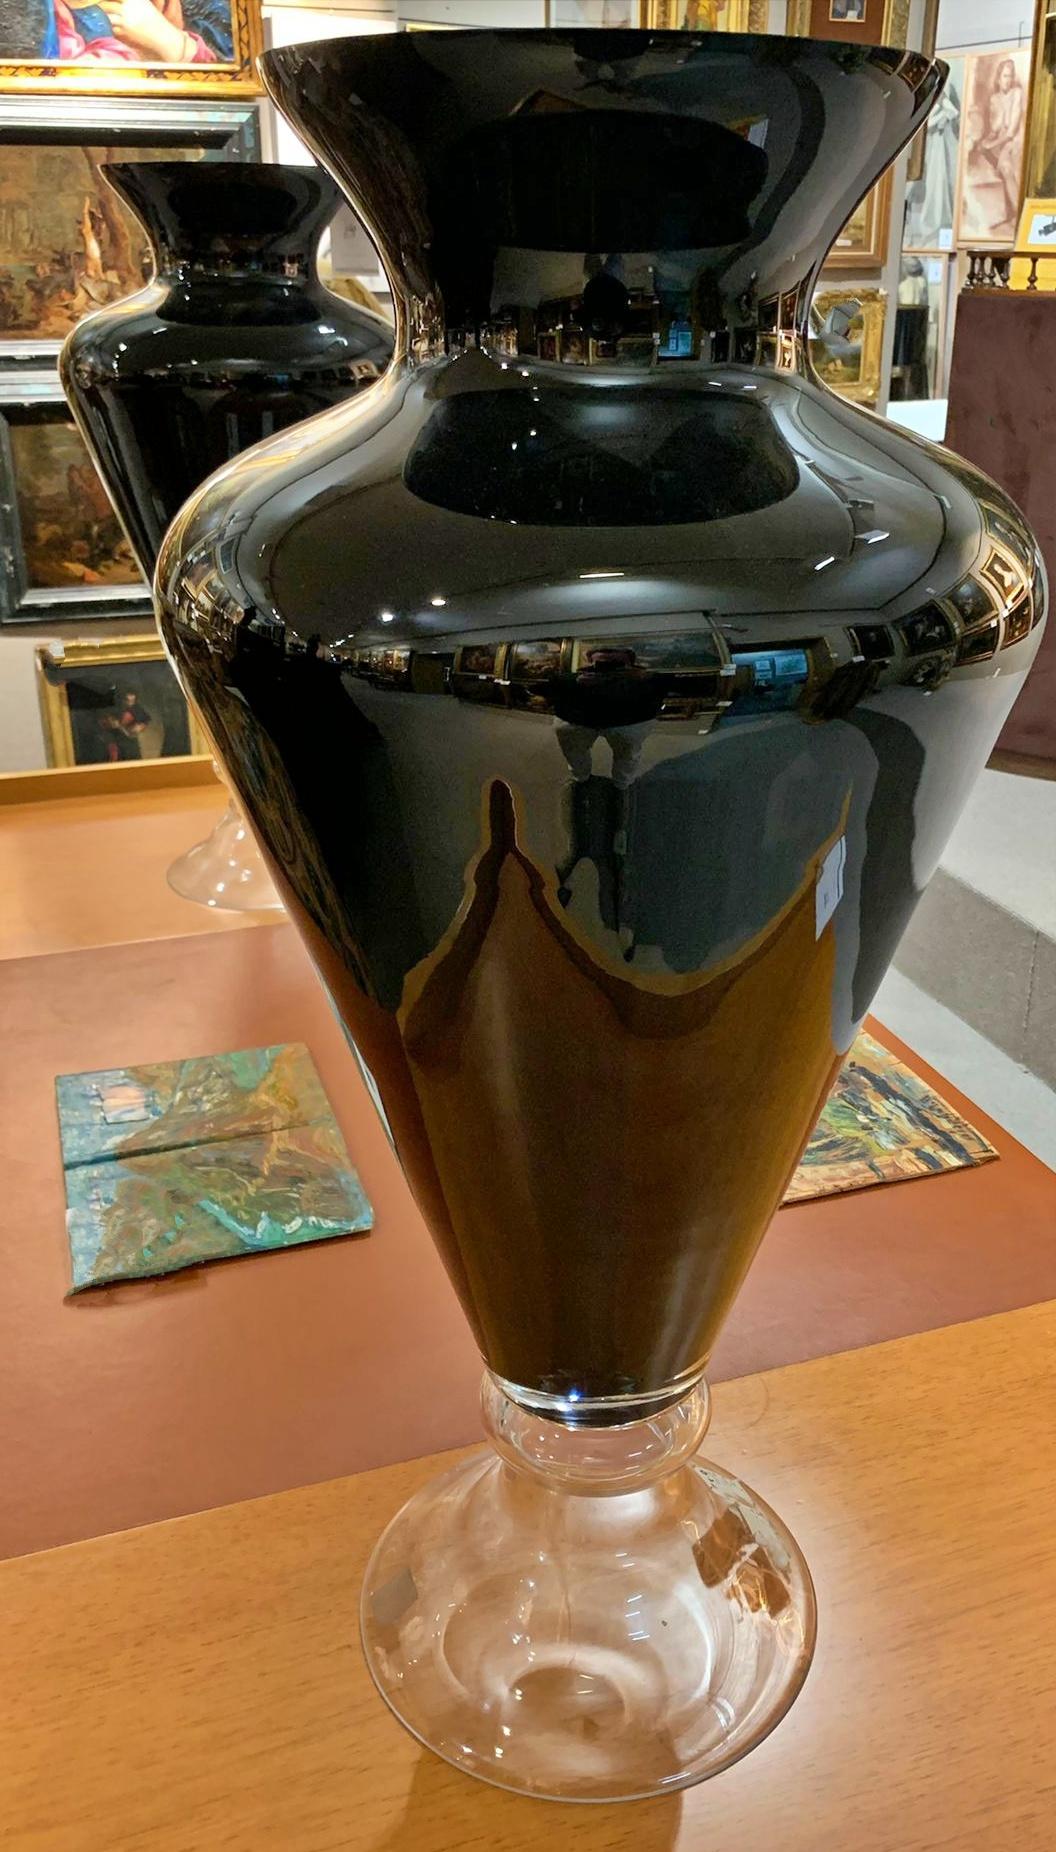 Pair of large Italian vases
Crystal
20th century
Height: 84cm
Diameter: 44cm
Very good conditions.